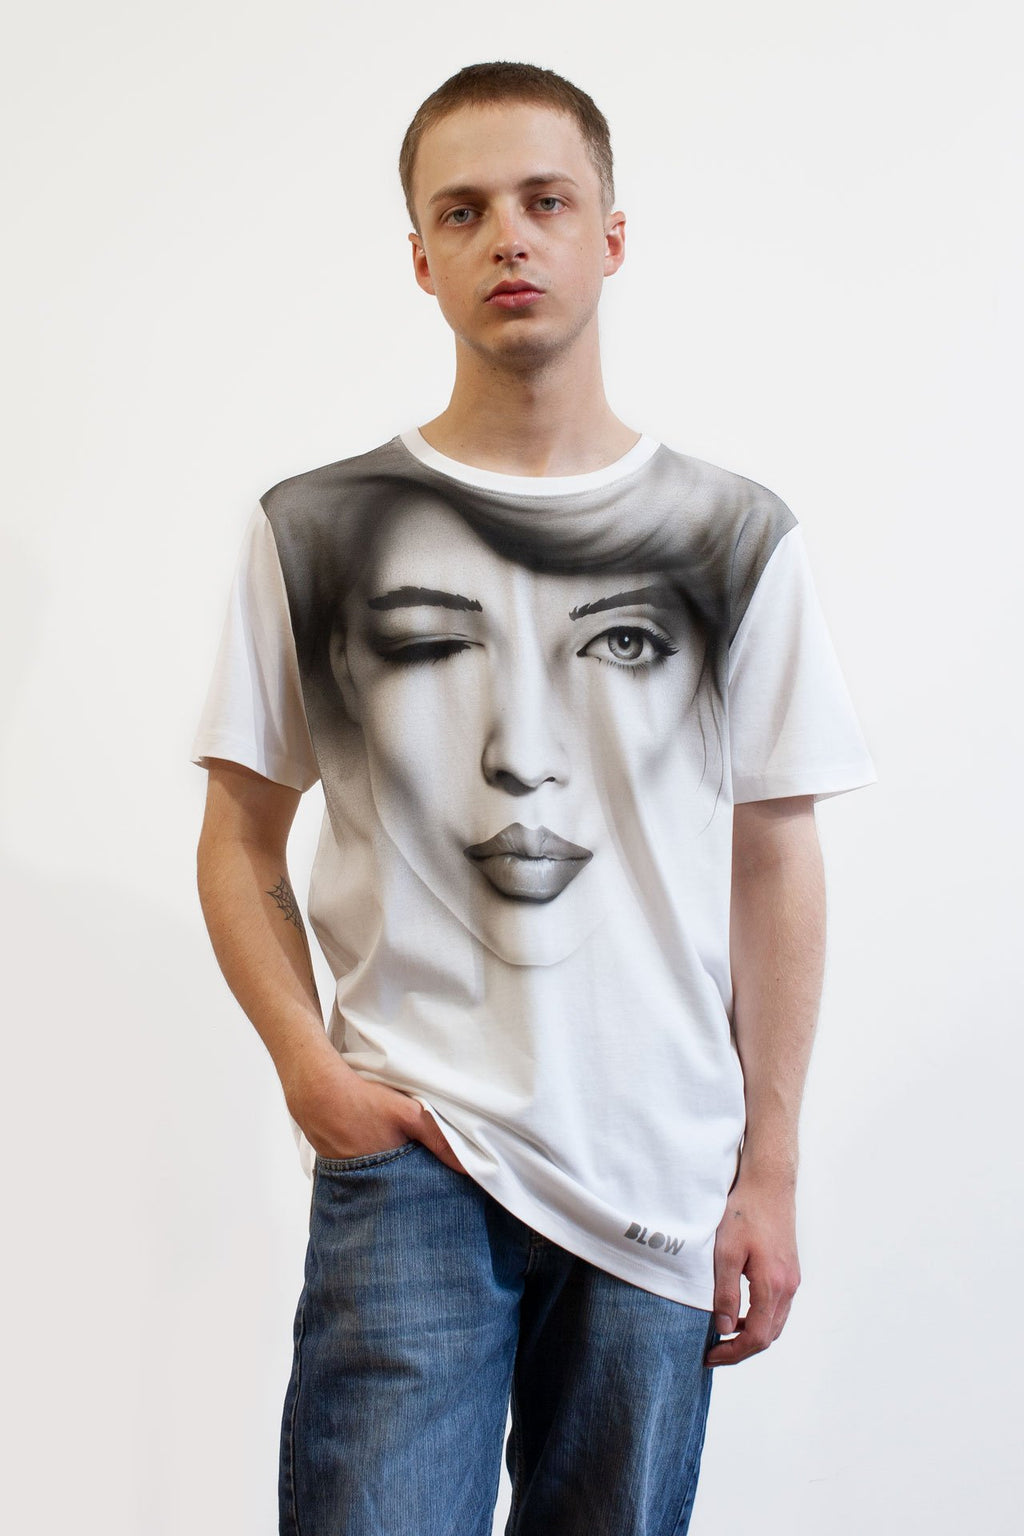 SHE WINKED (black&white) - Unisex premium short sleeve t-shirt - BLOW London